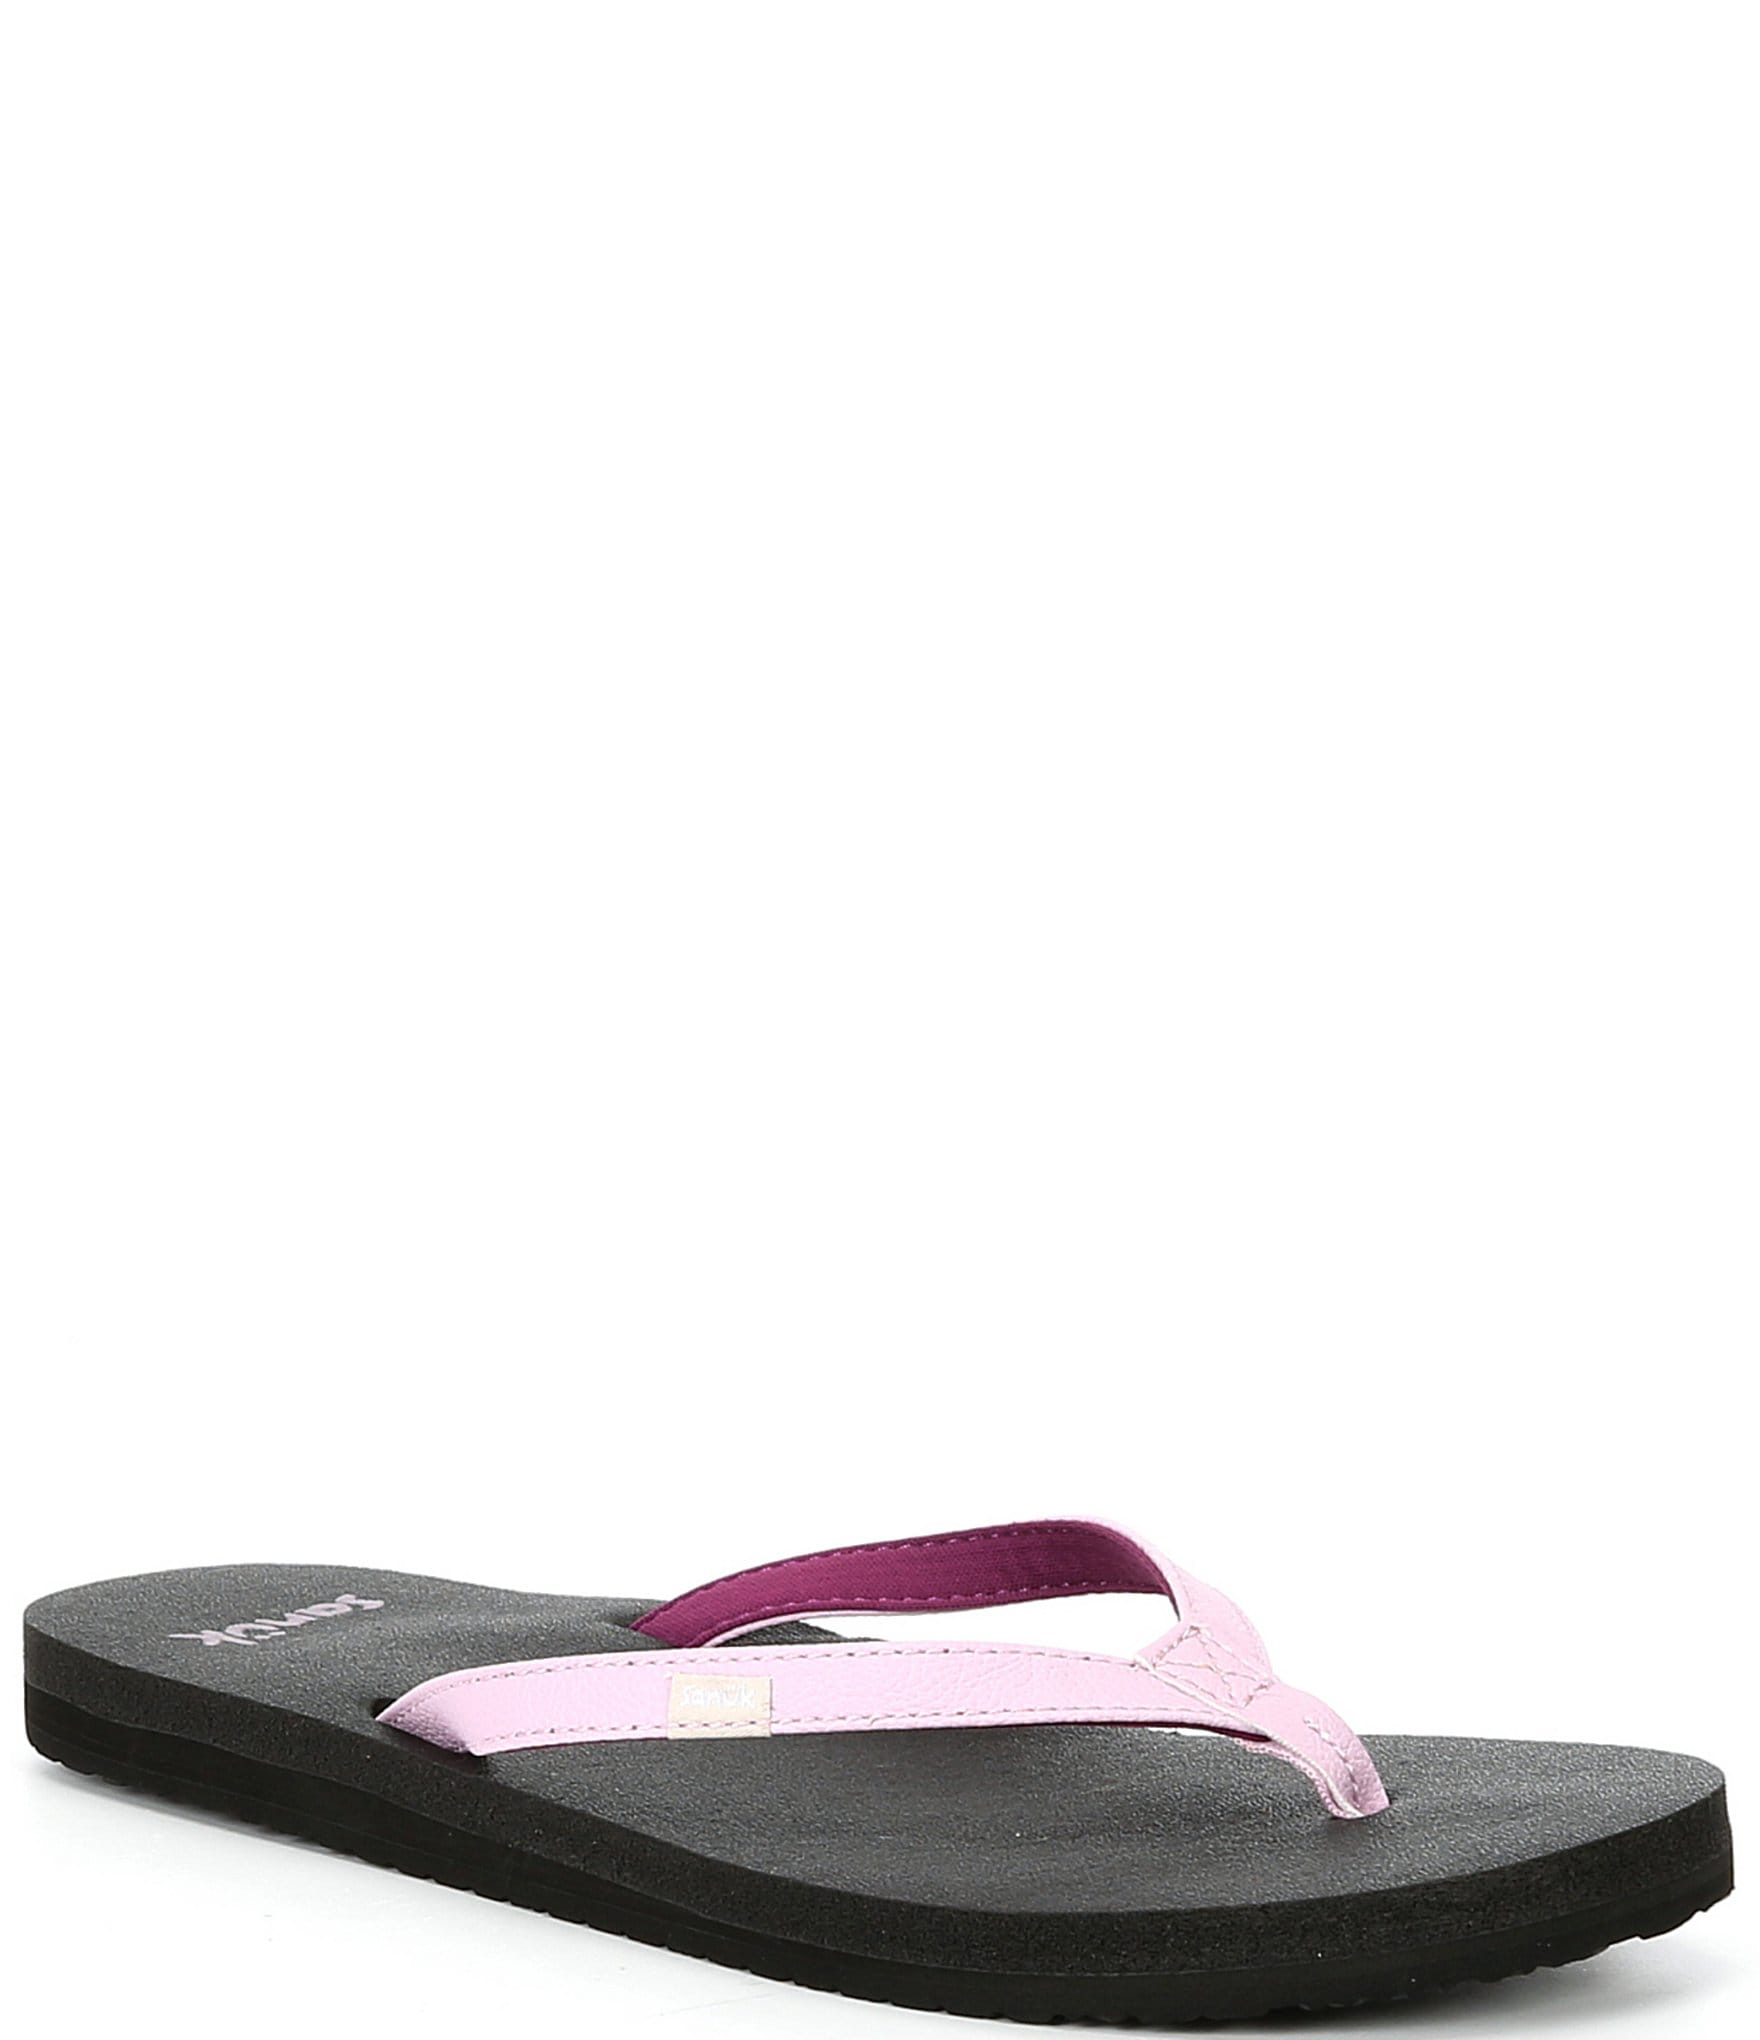 Sanuk Womens Size 6 Thong Sandals Flip Flop Yoga Mat Pink Black Shoes